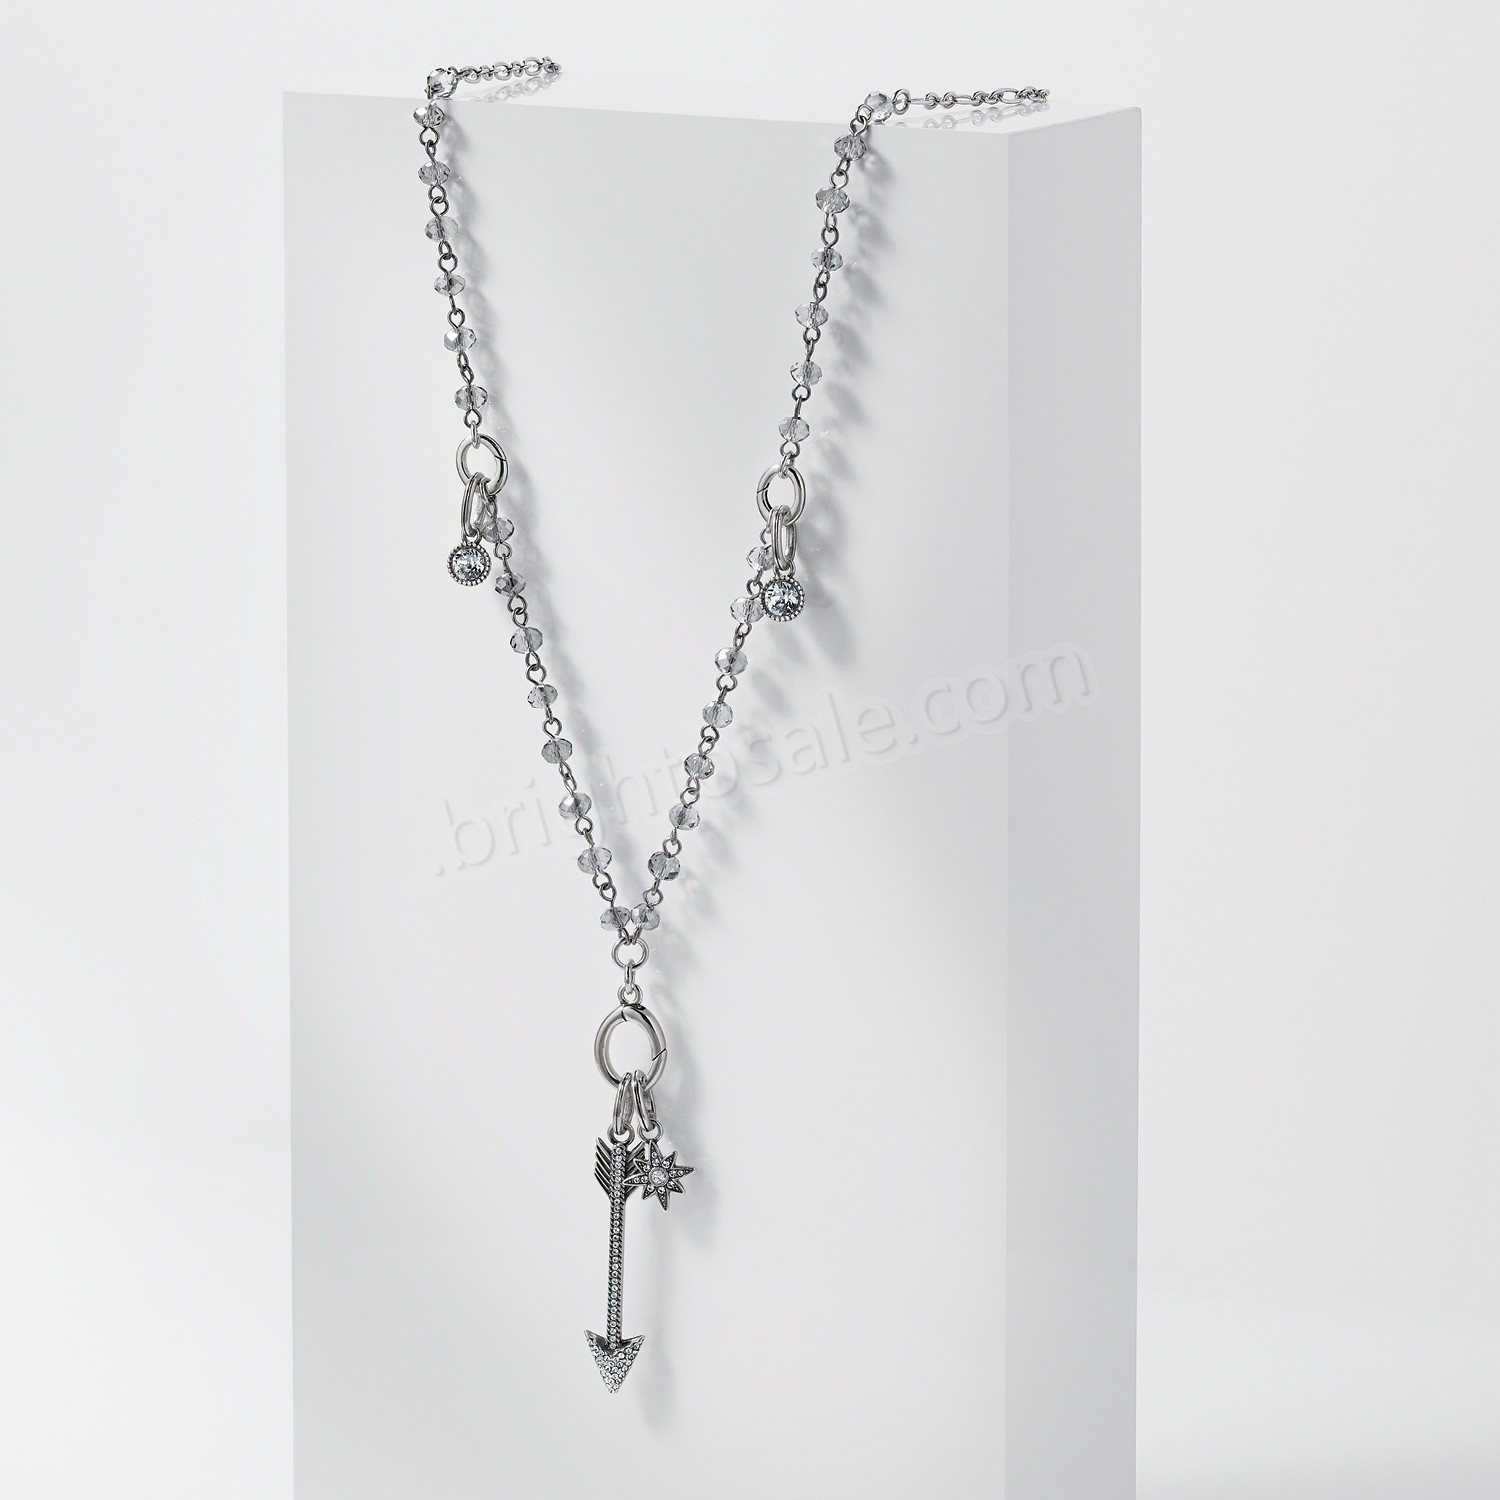 Brighton Collectibles & Online Discount Valor Amulet Necklace Gift Set - Brighton Collectibles & Online Discount Valor Amulet Necklace Gift Set